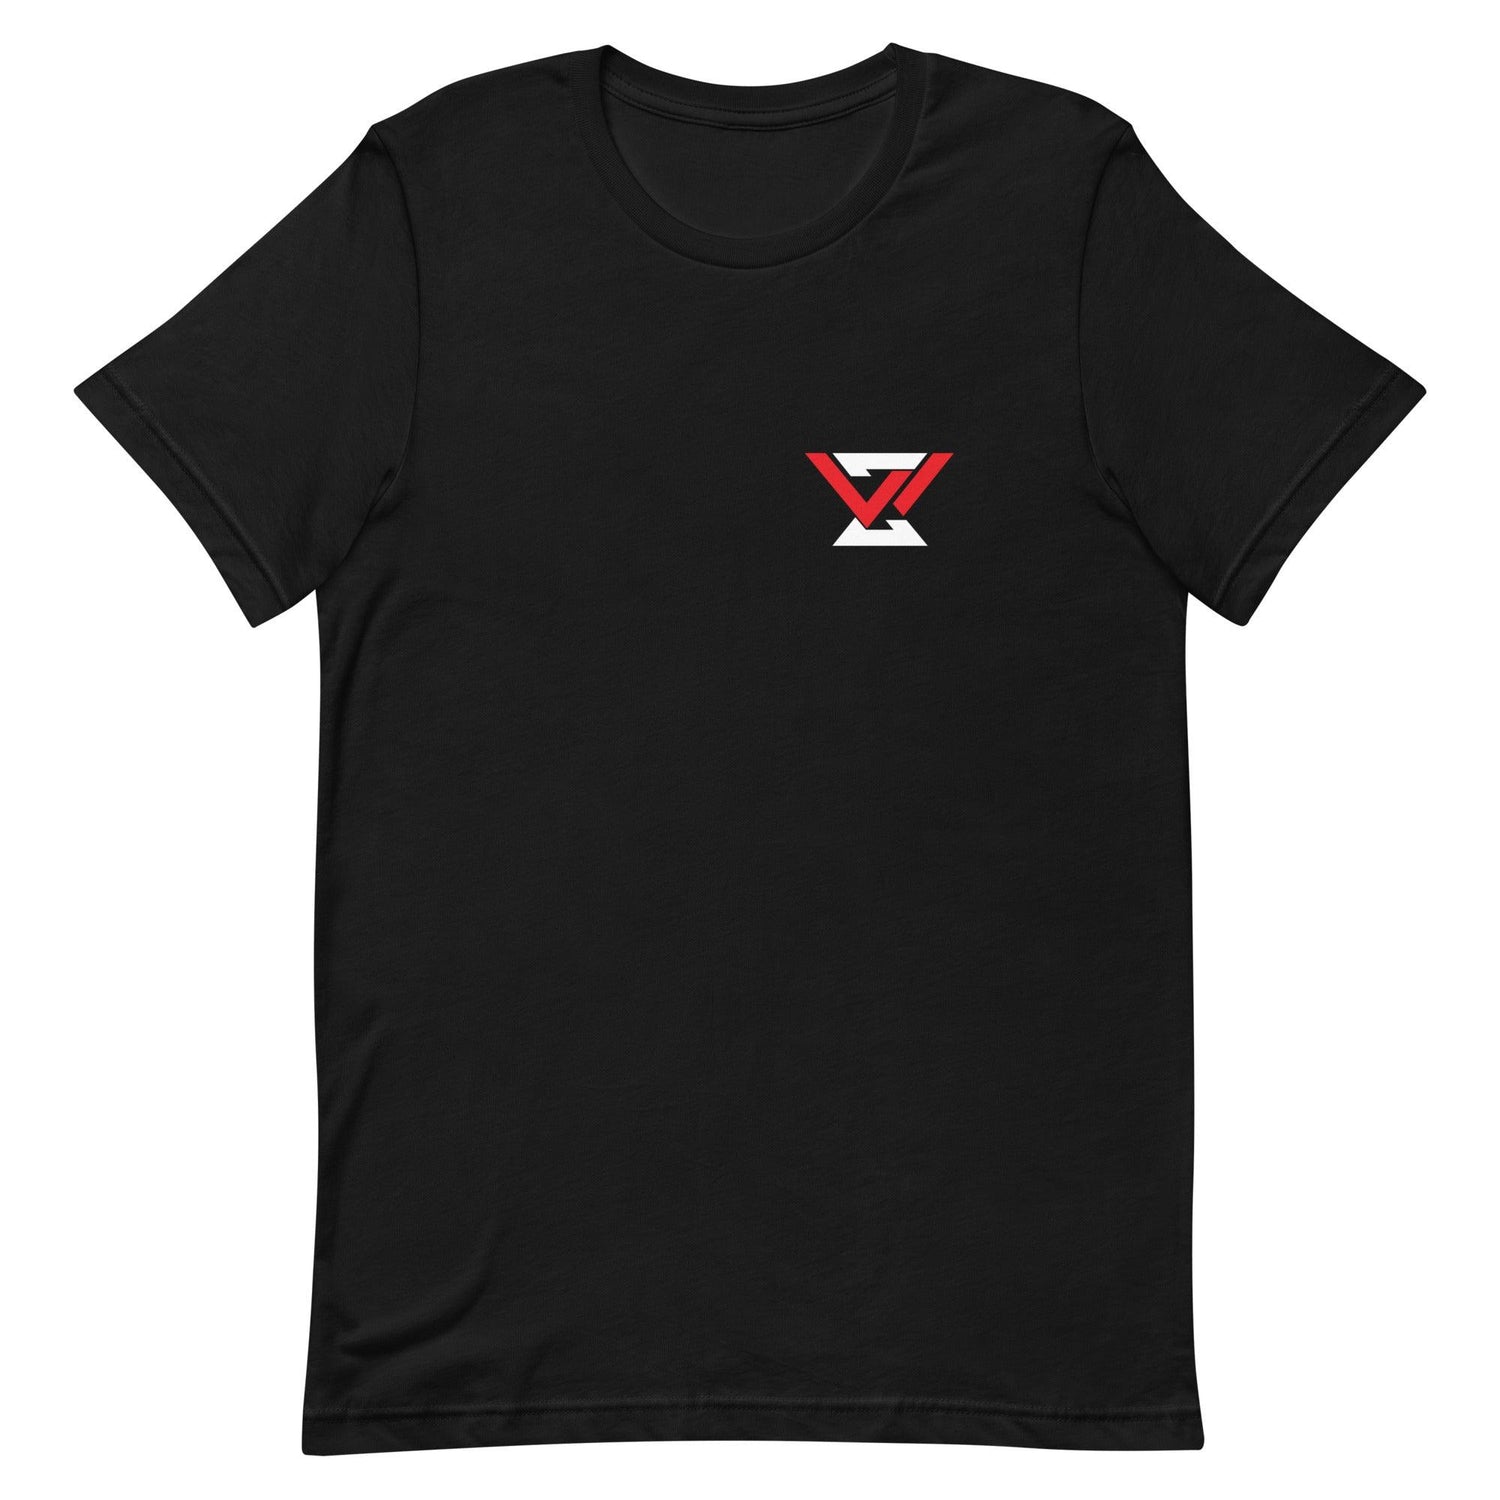 Zack Wheeler “ZW” t-shirt - Fan Arch